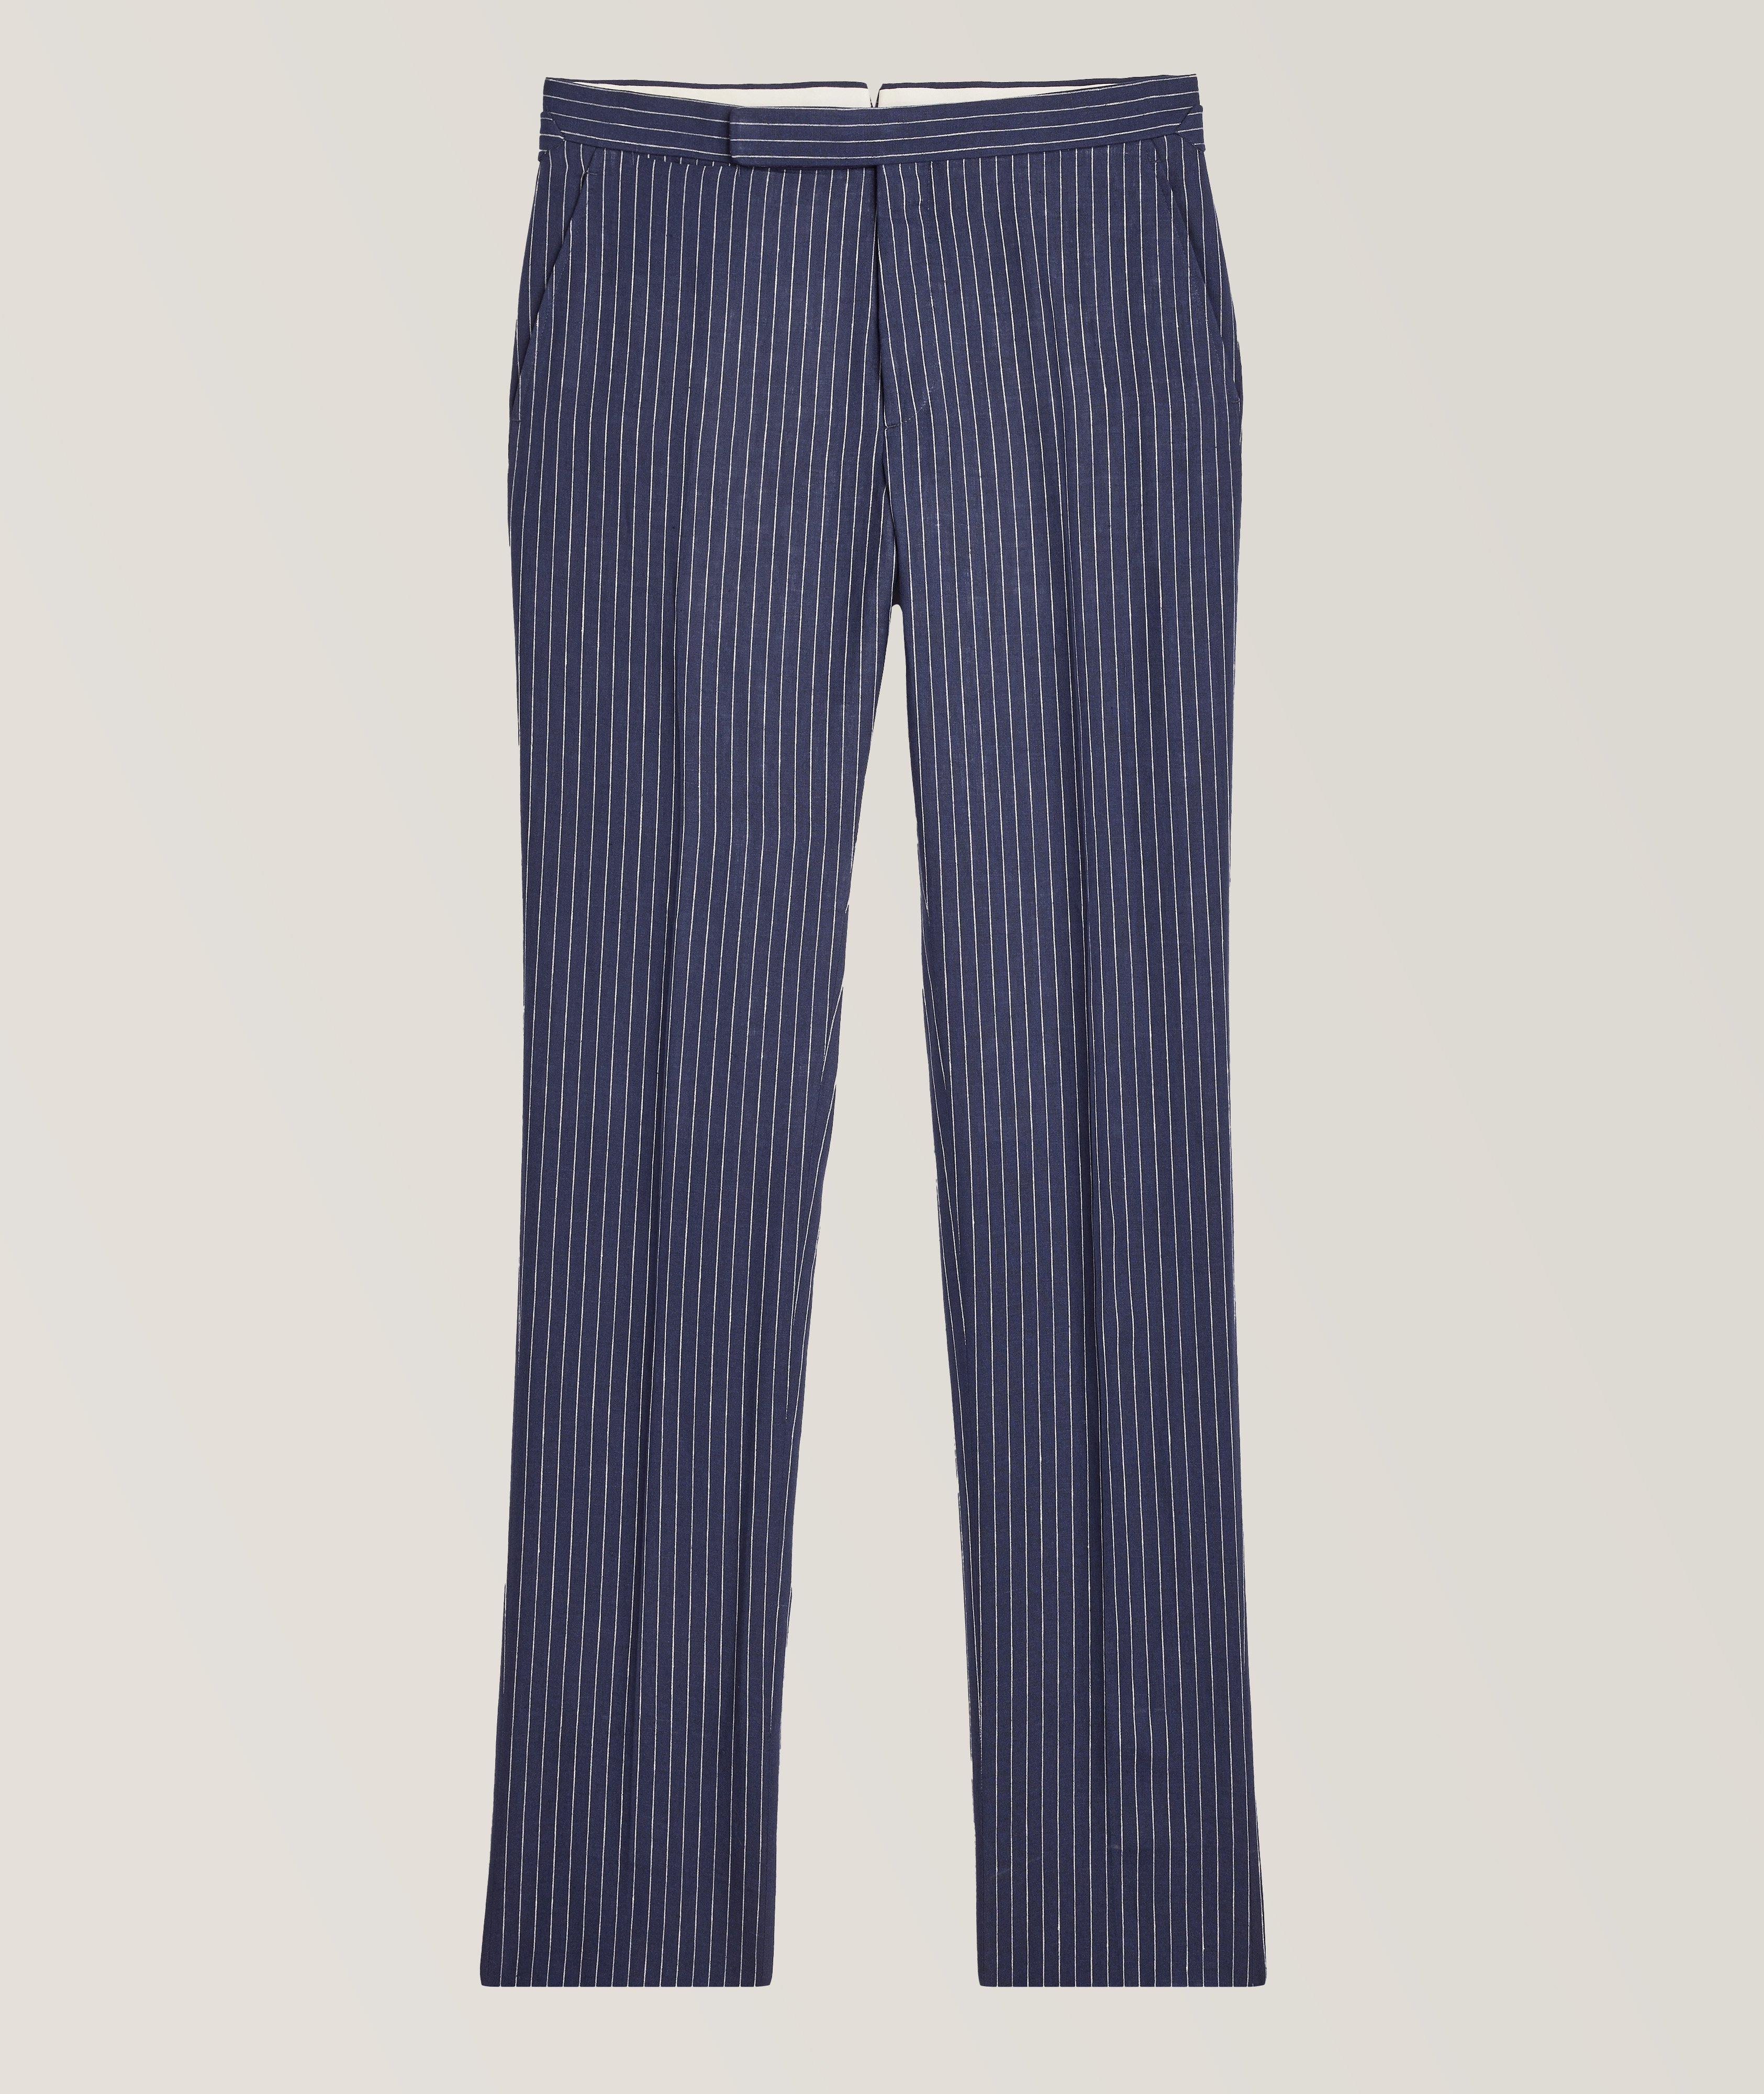 Ralph Lauren Purple Label Gregory Narrow Striped Linen Pants, Dress Pants